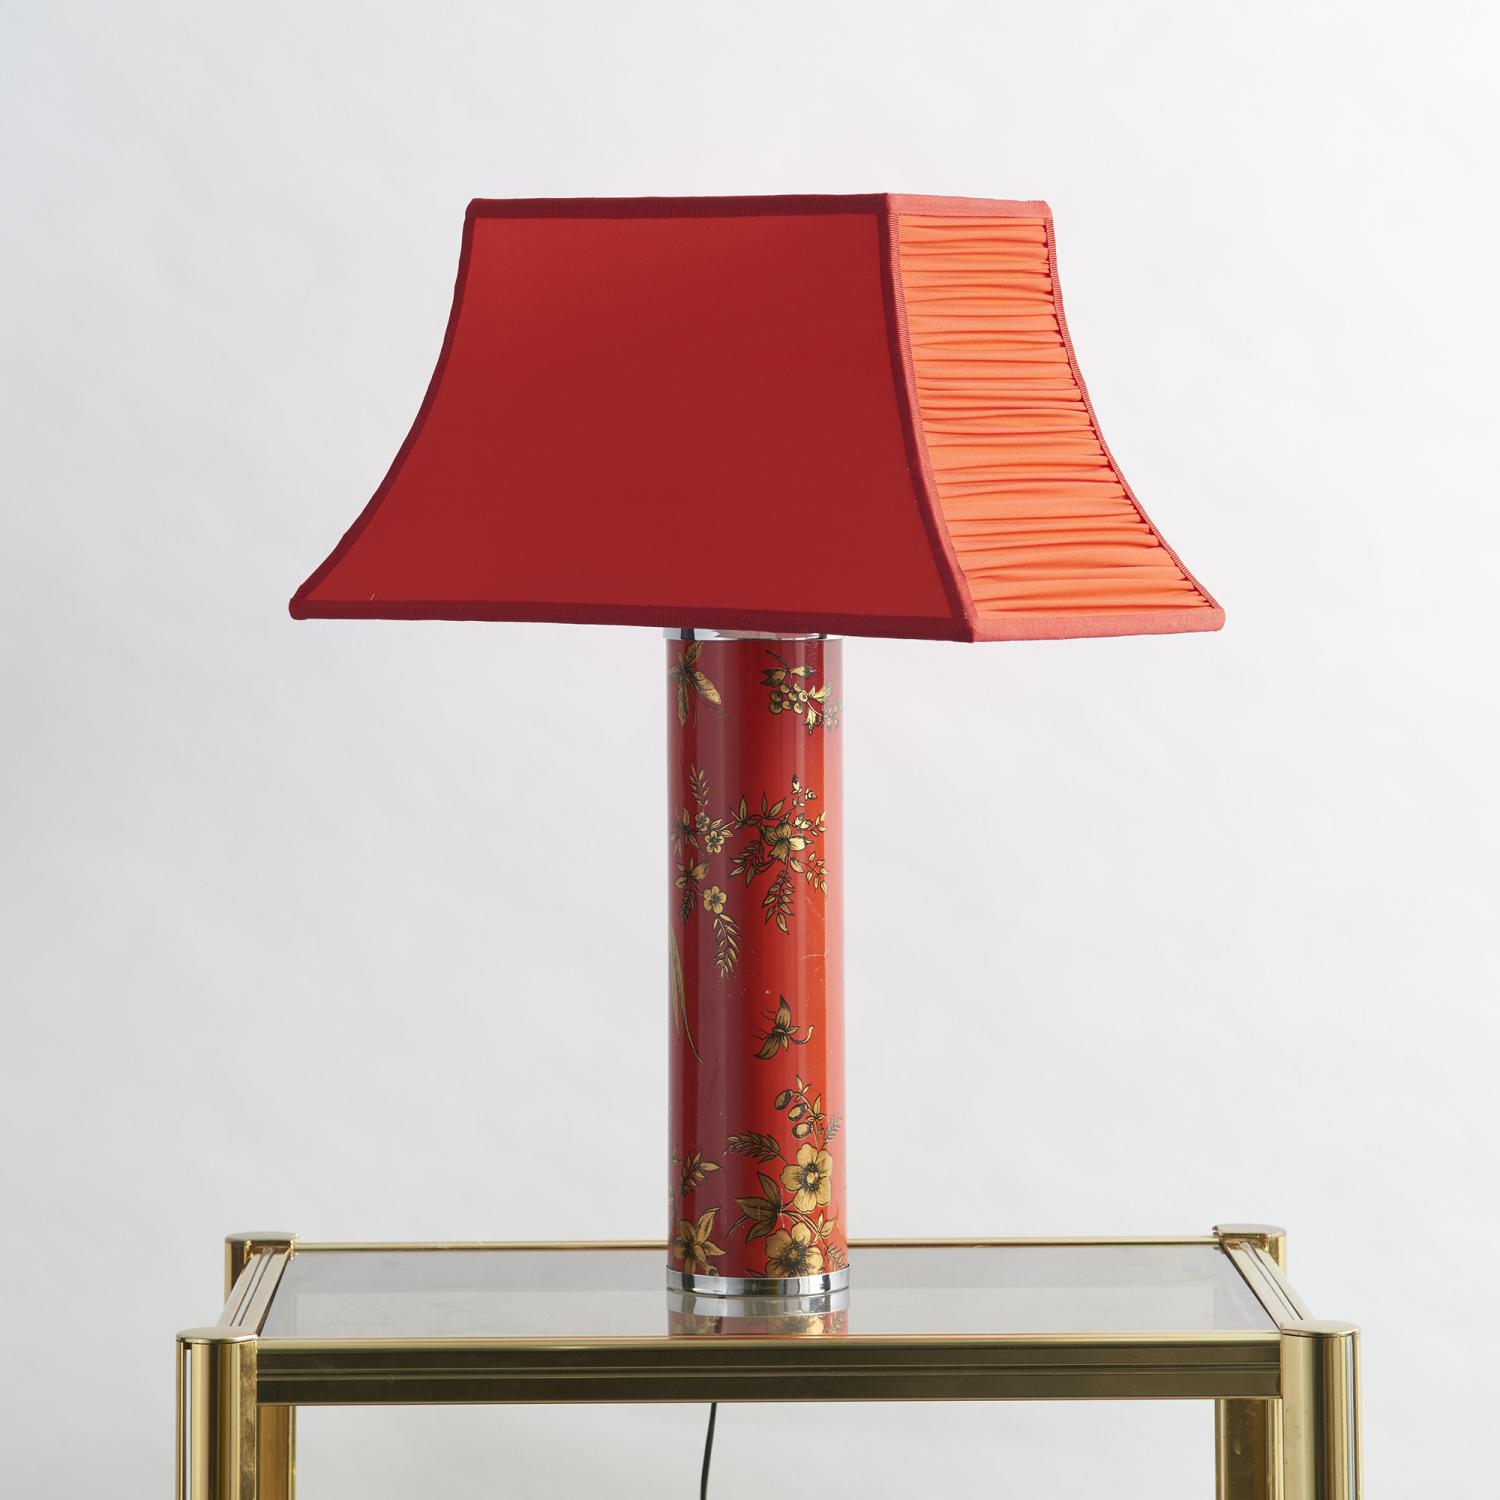 Piero Fornasetti table lamp